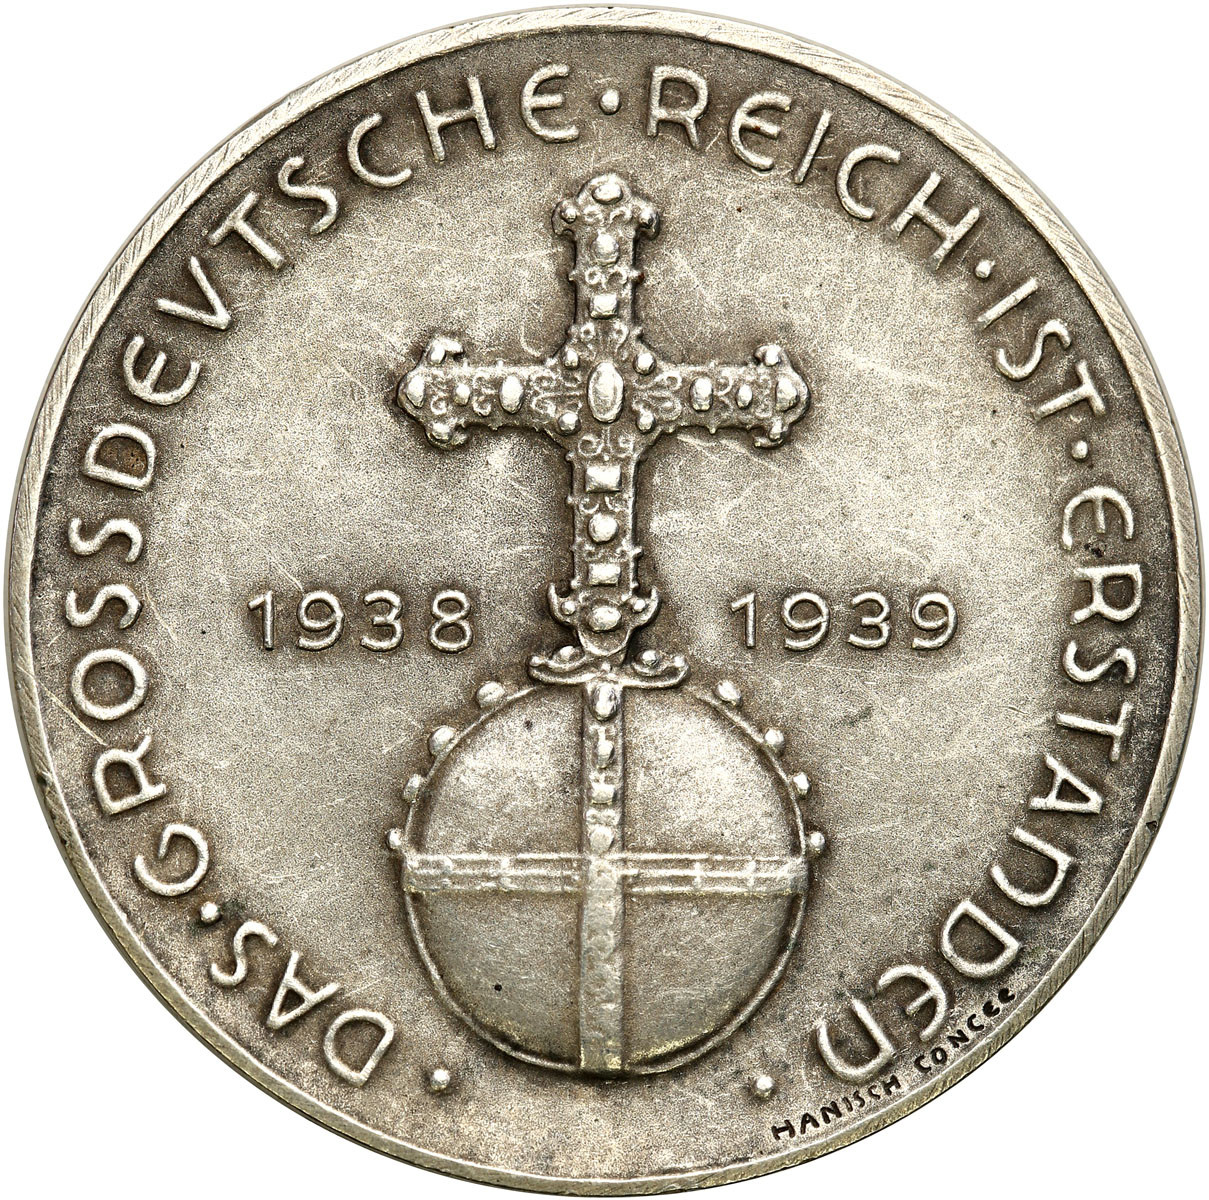 Niemcy, III Rzesza. Medal Adolf Hitler 1939, srebro